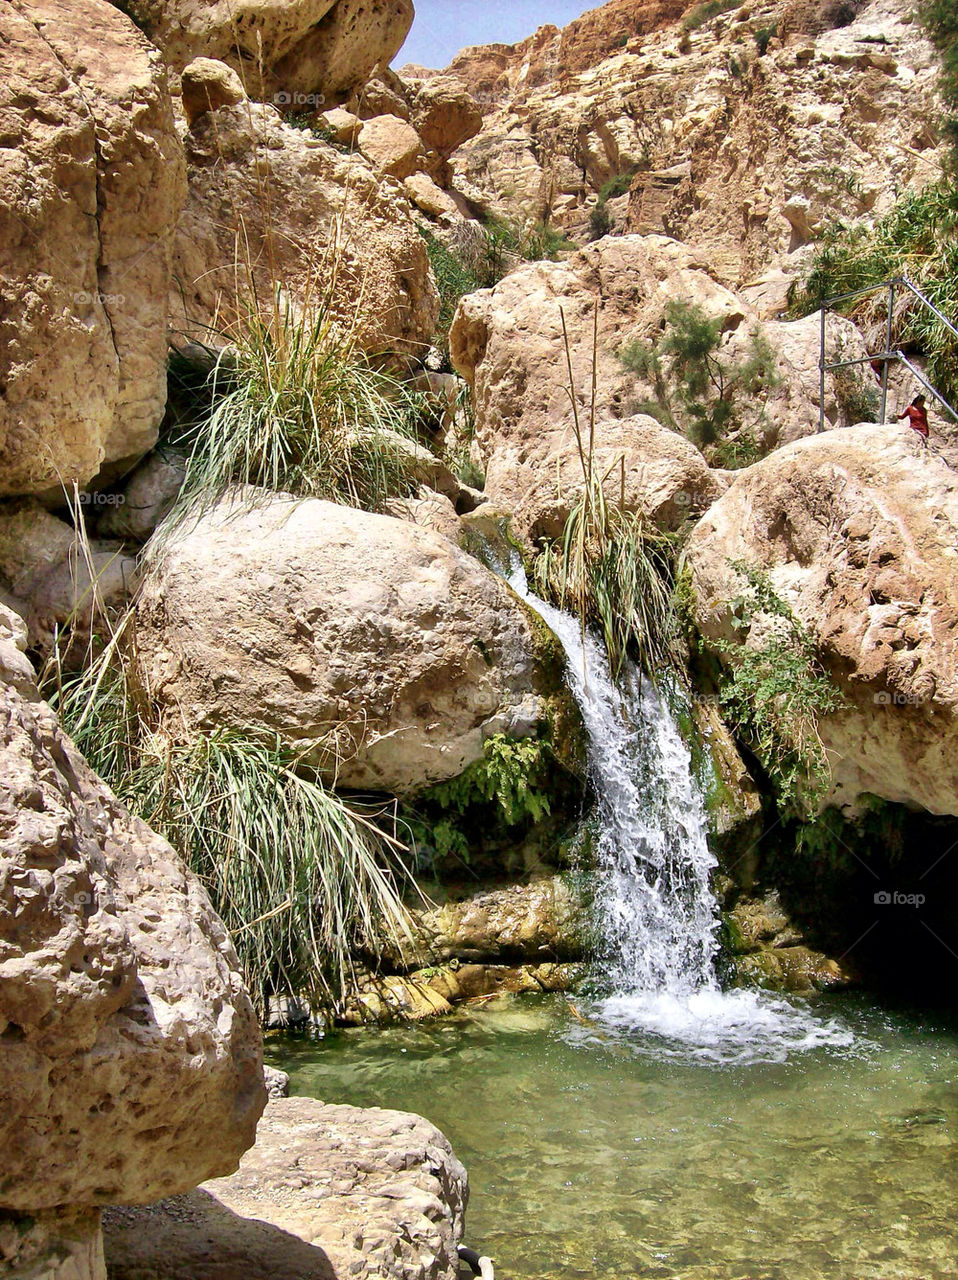 Waterfall in the desert